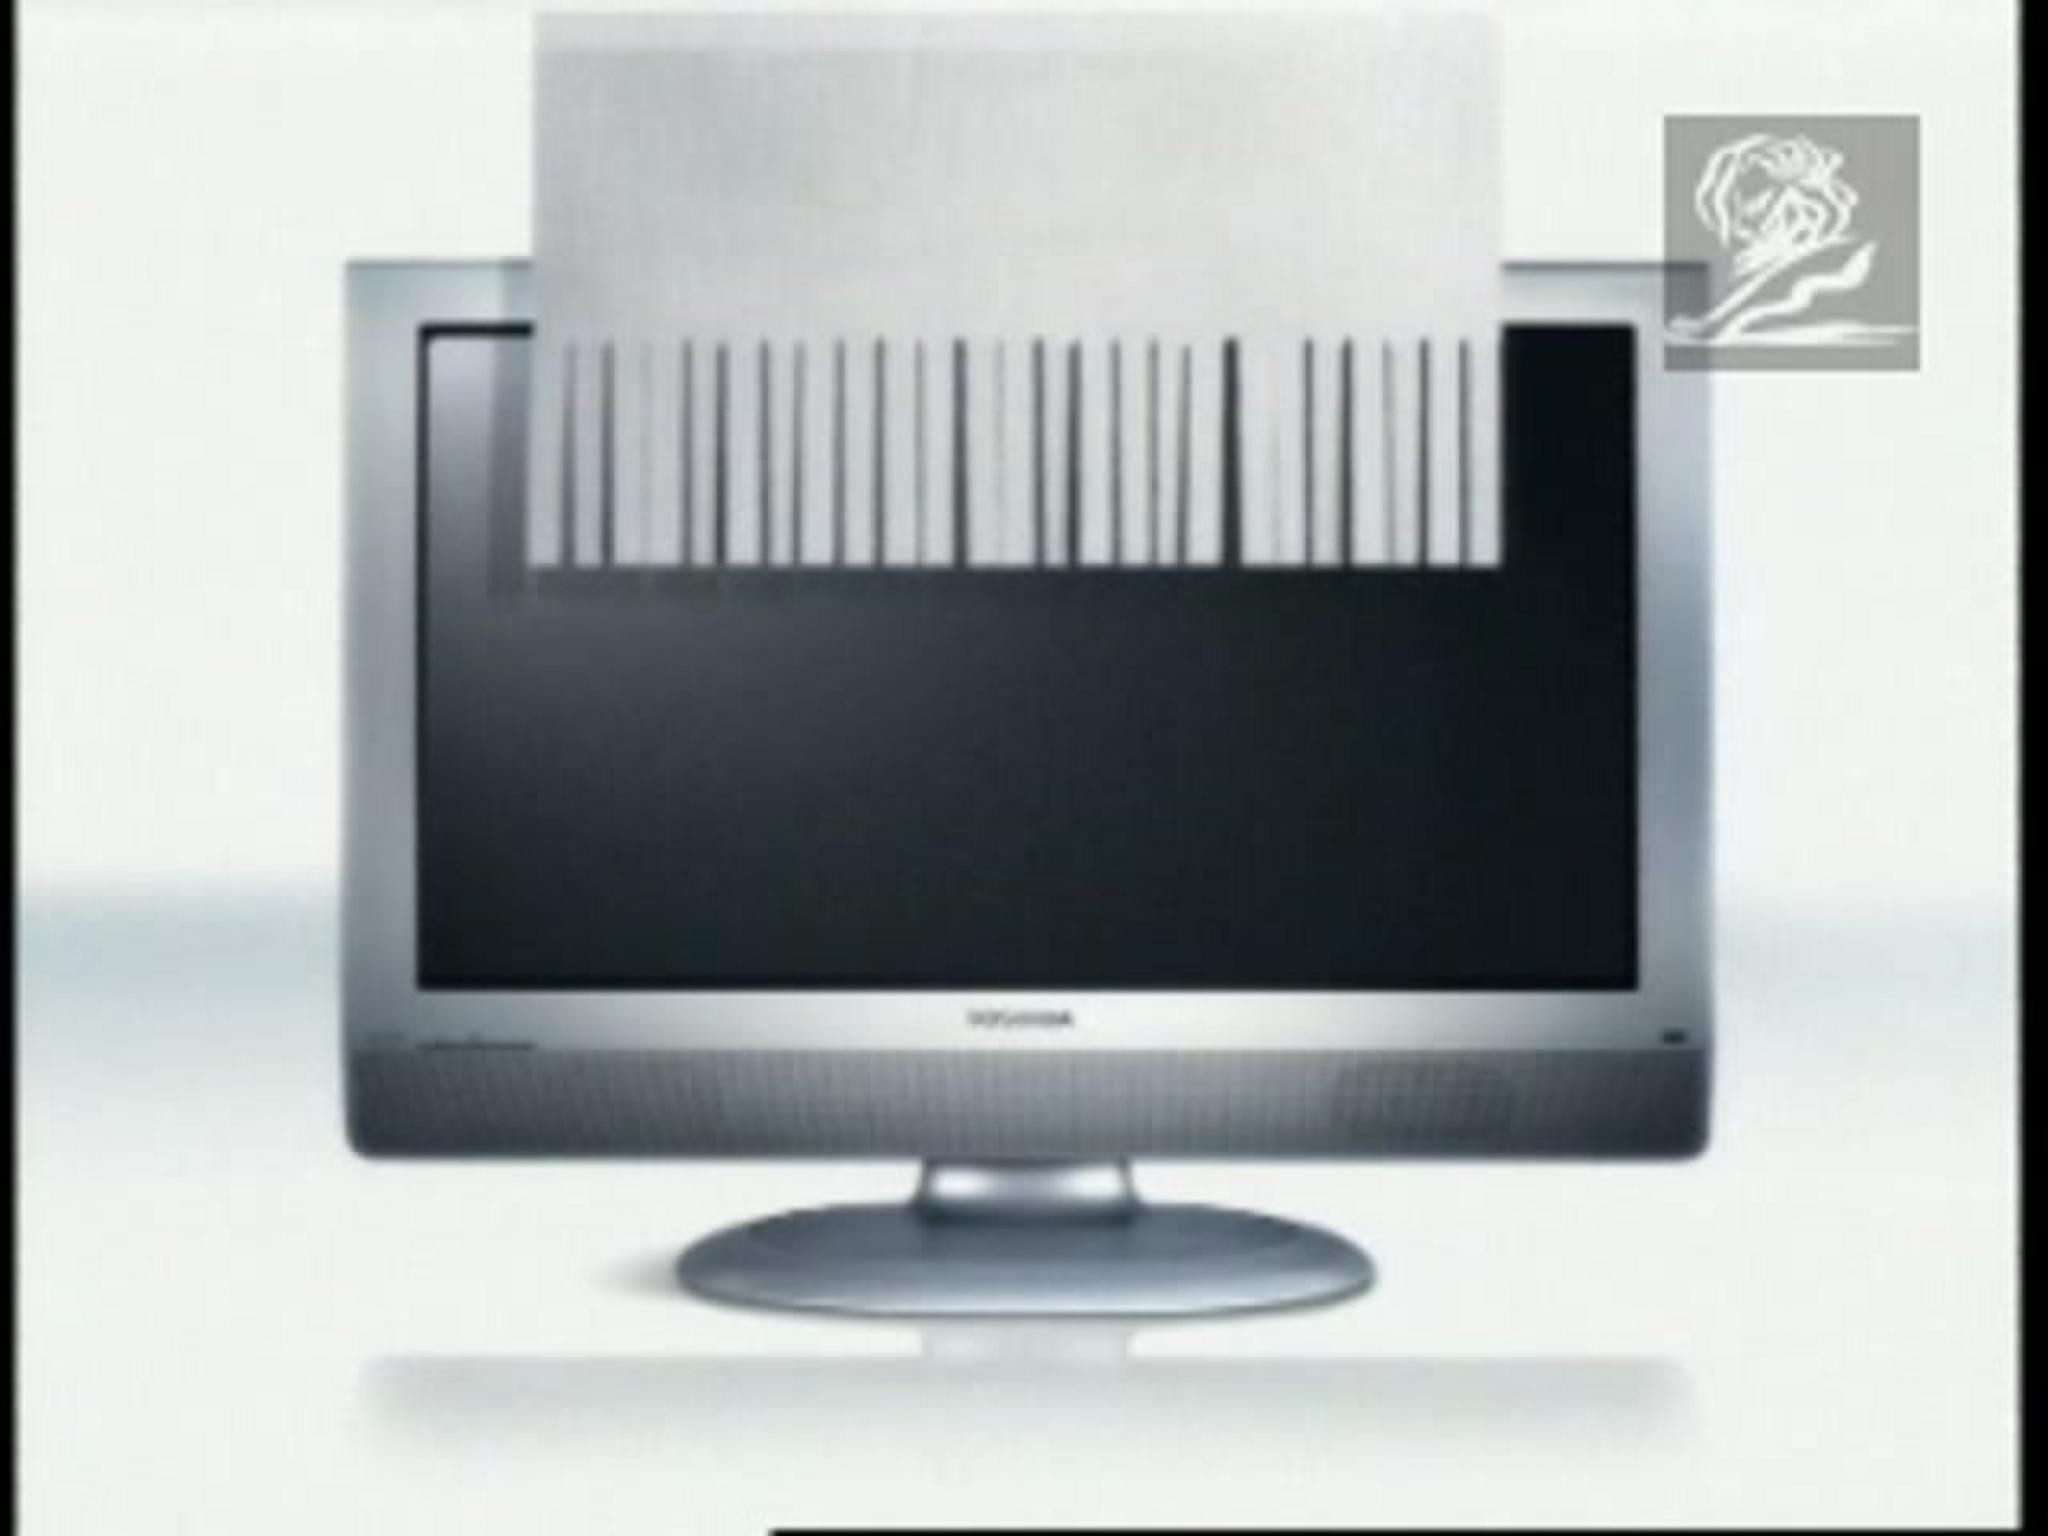 LCD FLATSCREEN TELEVISION